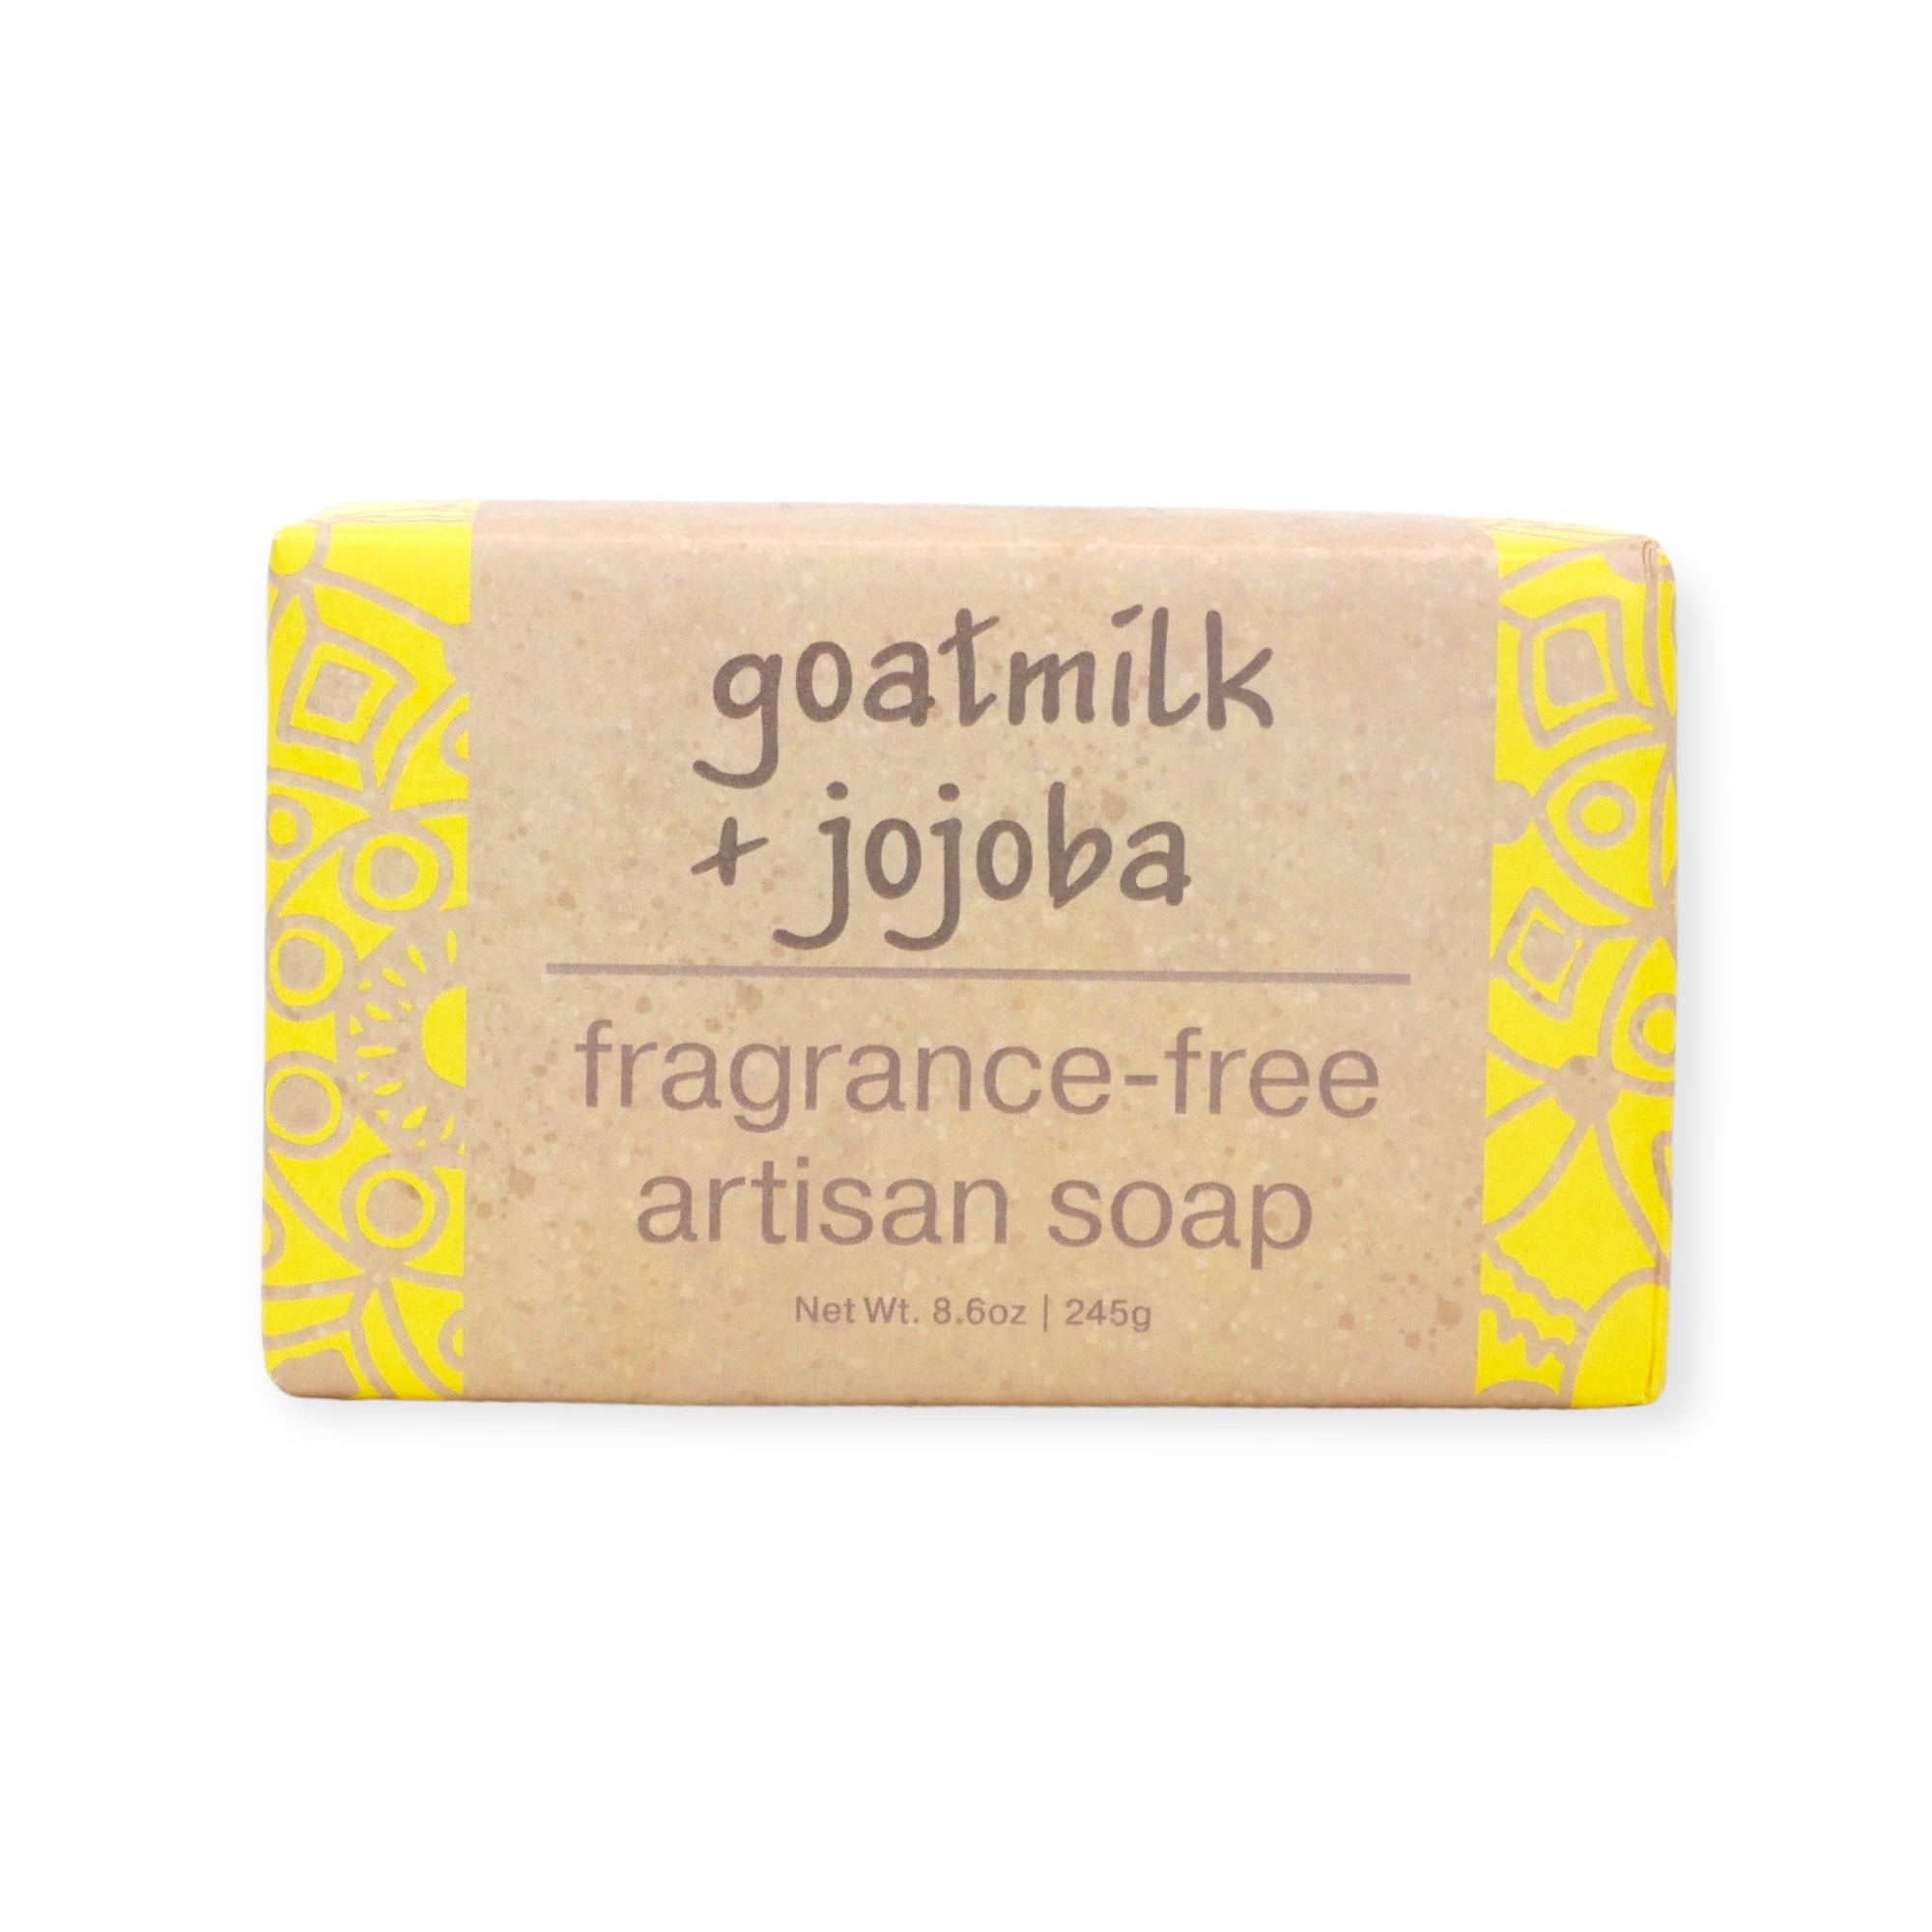 Goatmilk + Jojoba (fragrance free) Essential Oils Soap by Greenwich Bay Trading Co.